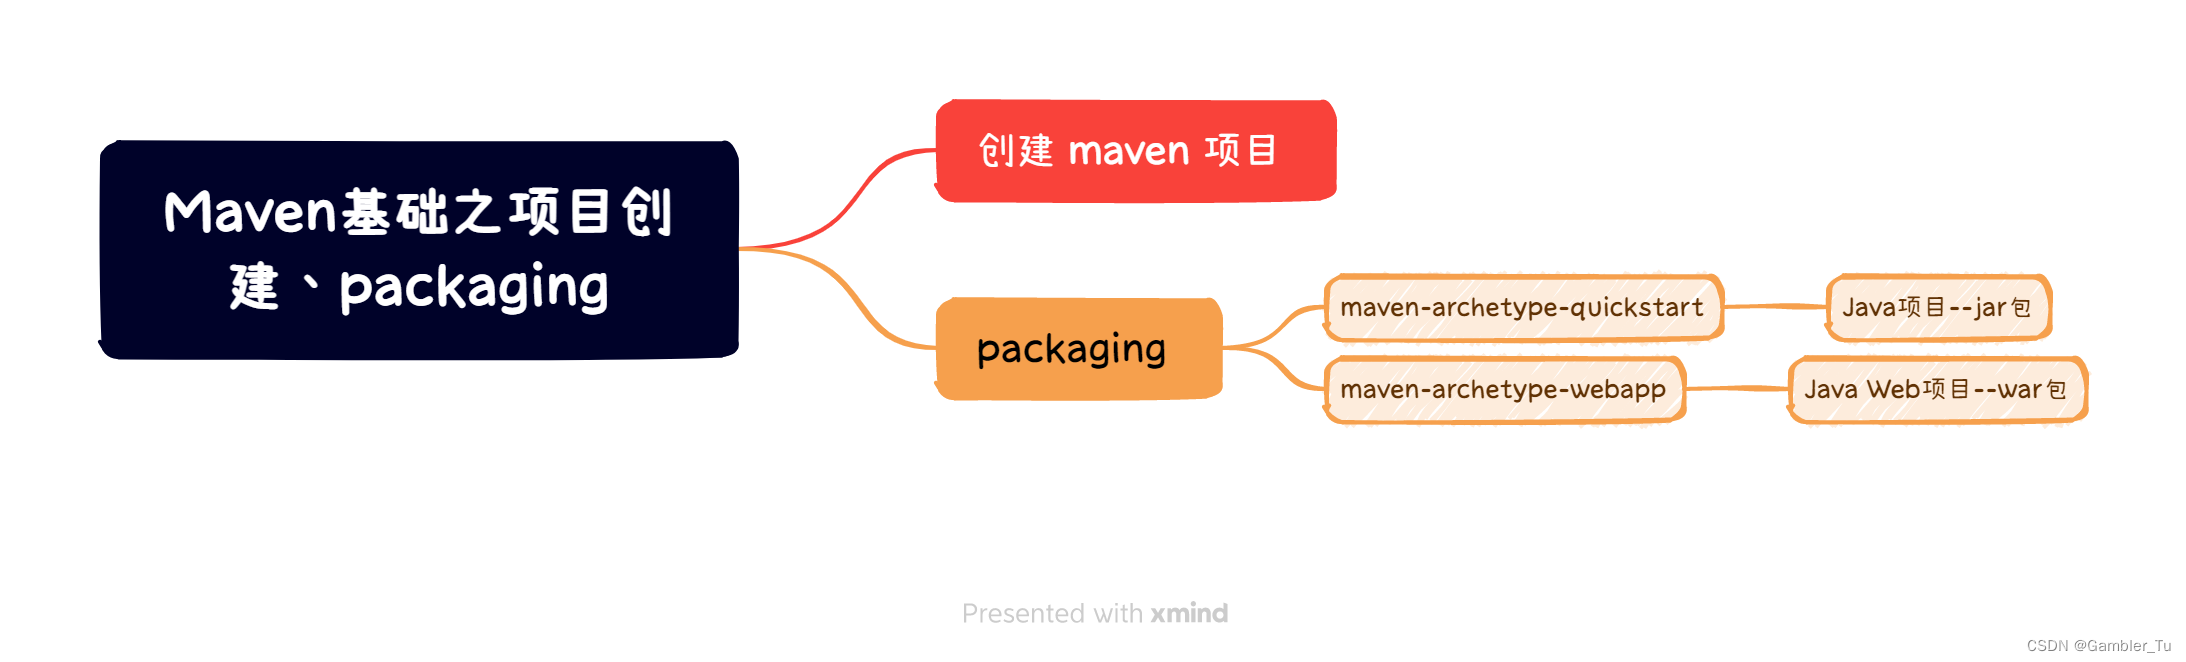 Maven基础之项目创建、packaging